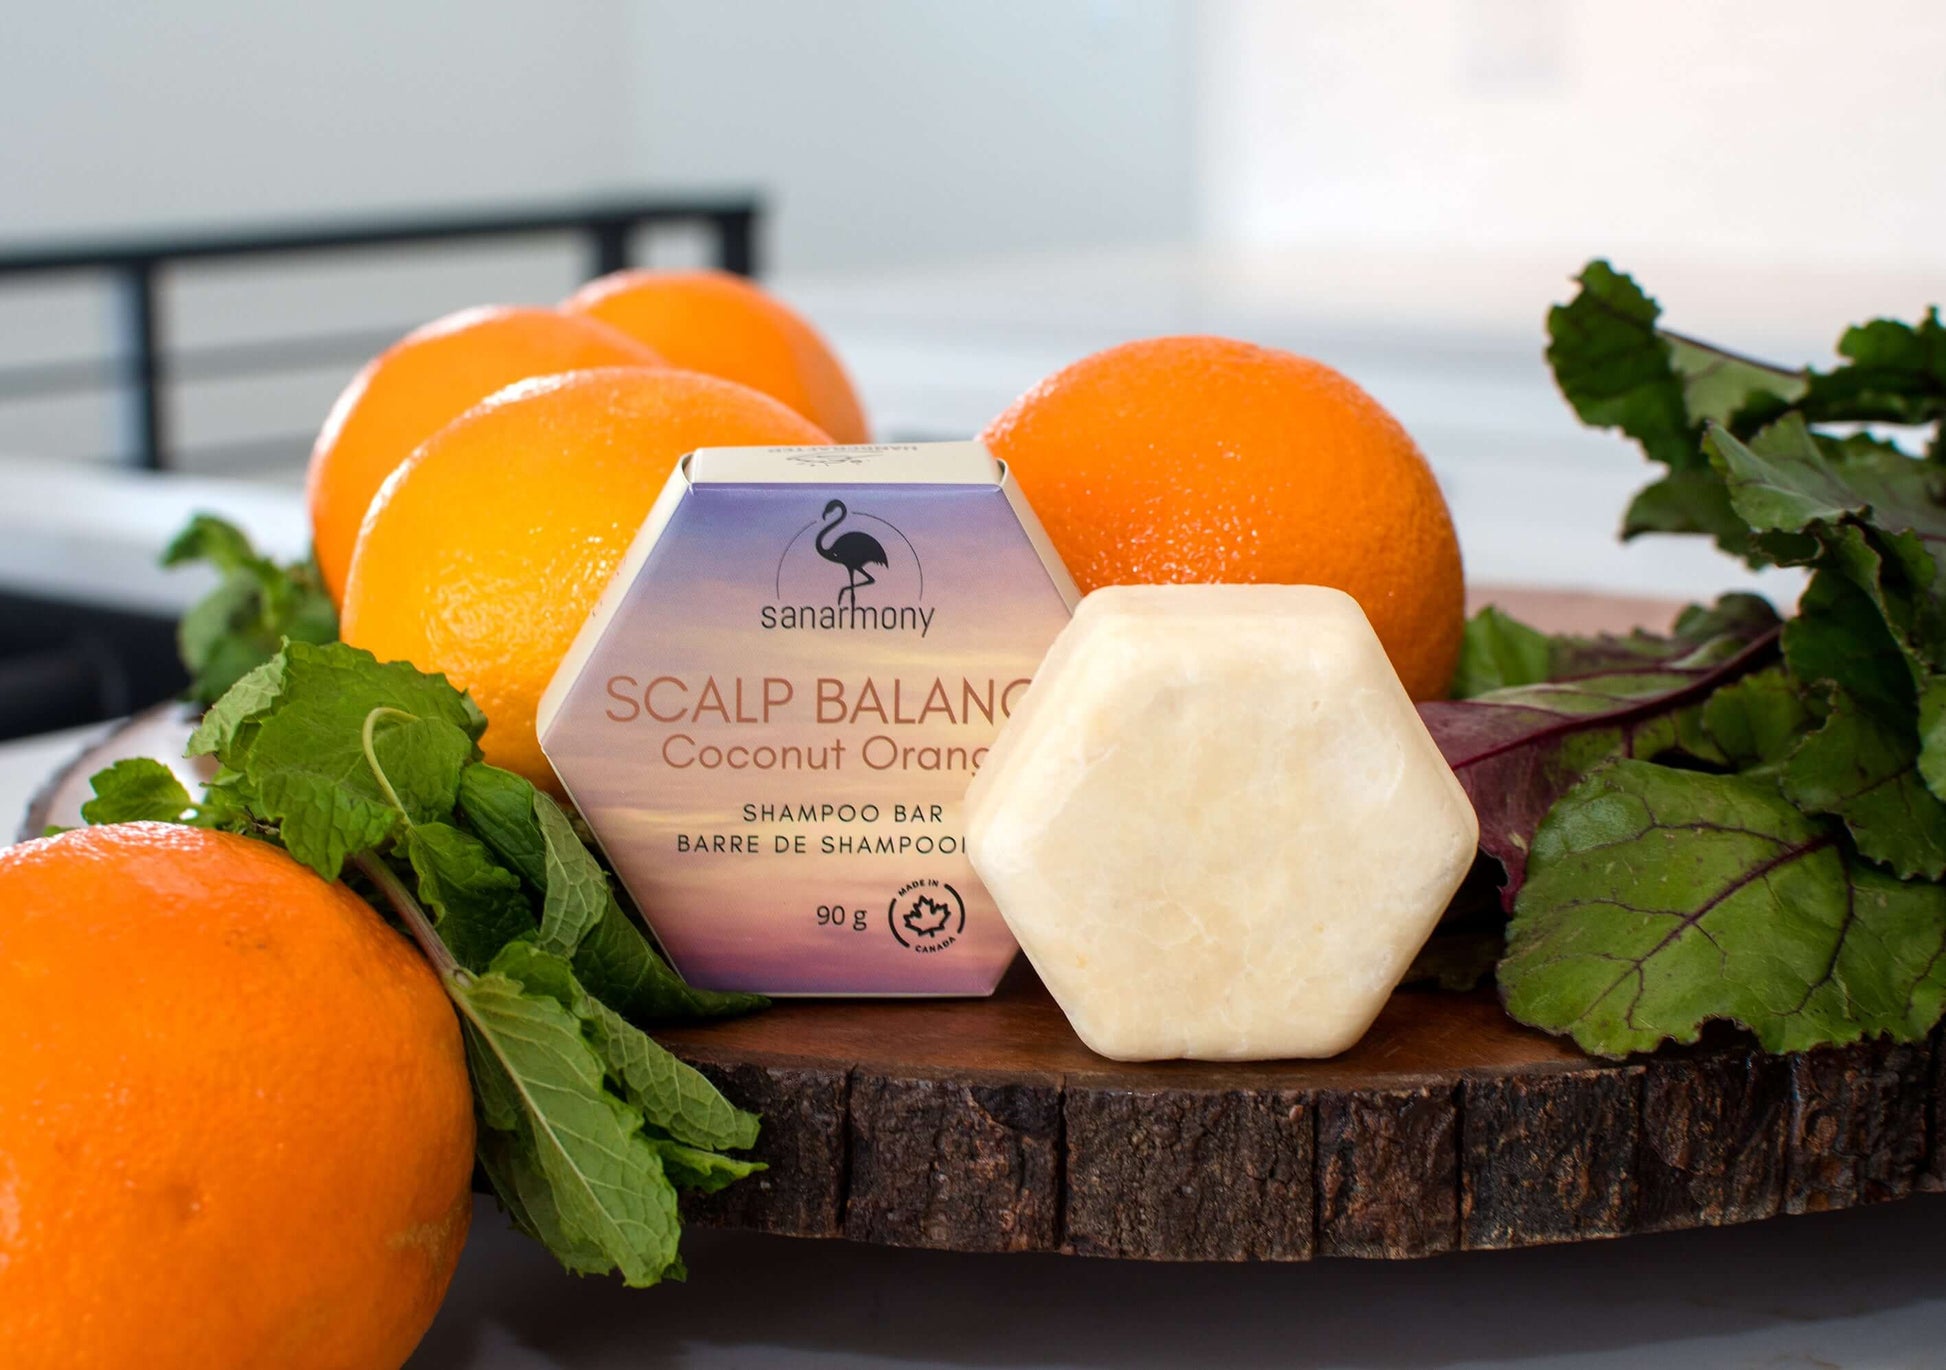 SCALP BALANCE SHAMPOO BAR: Coconut & Orange Boost hair growth & achieve smooth, voluminous locks with our natural Coconut & Orange Shampoo Bar. Zero sulphates or parabens, just pure freshness.